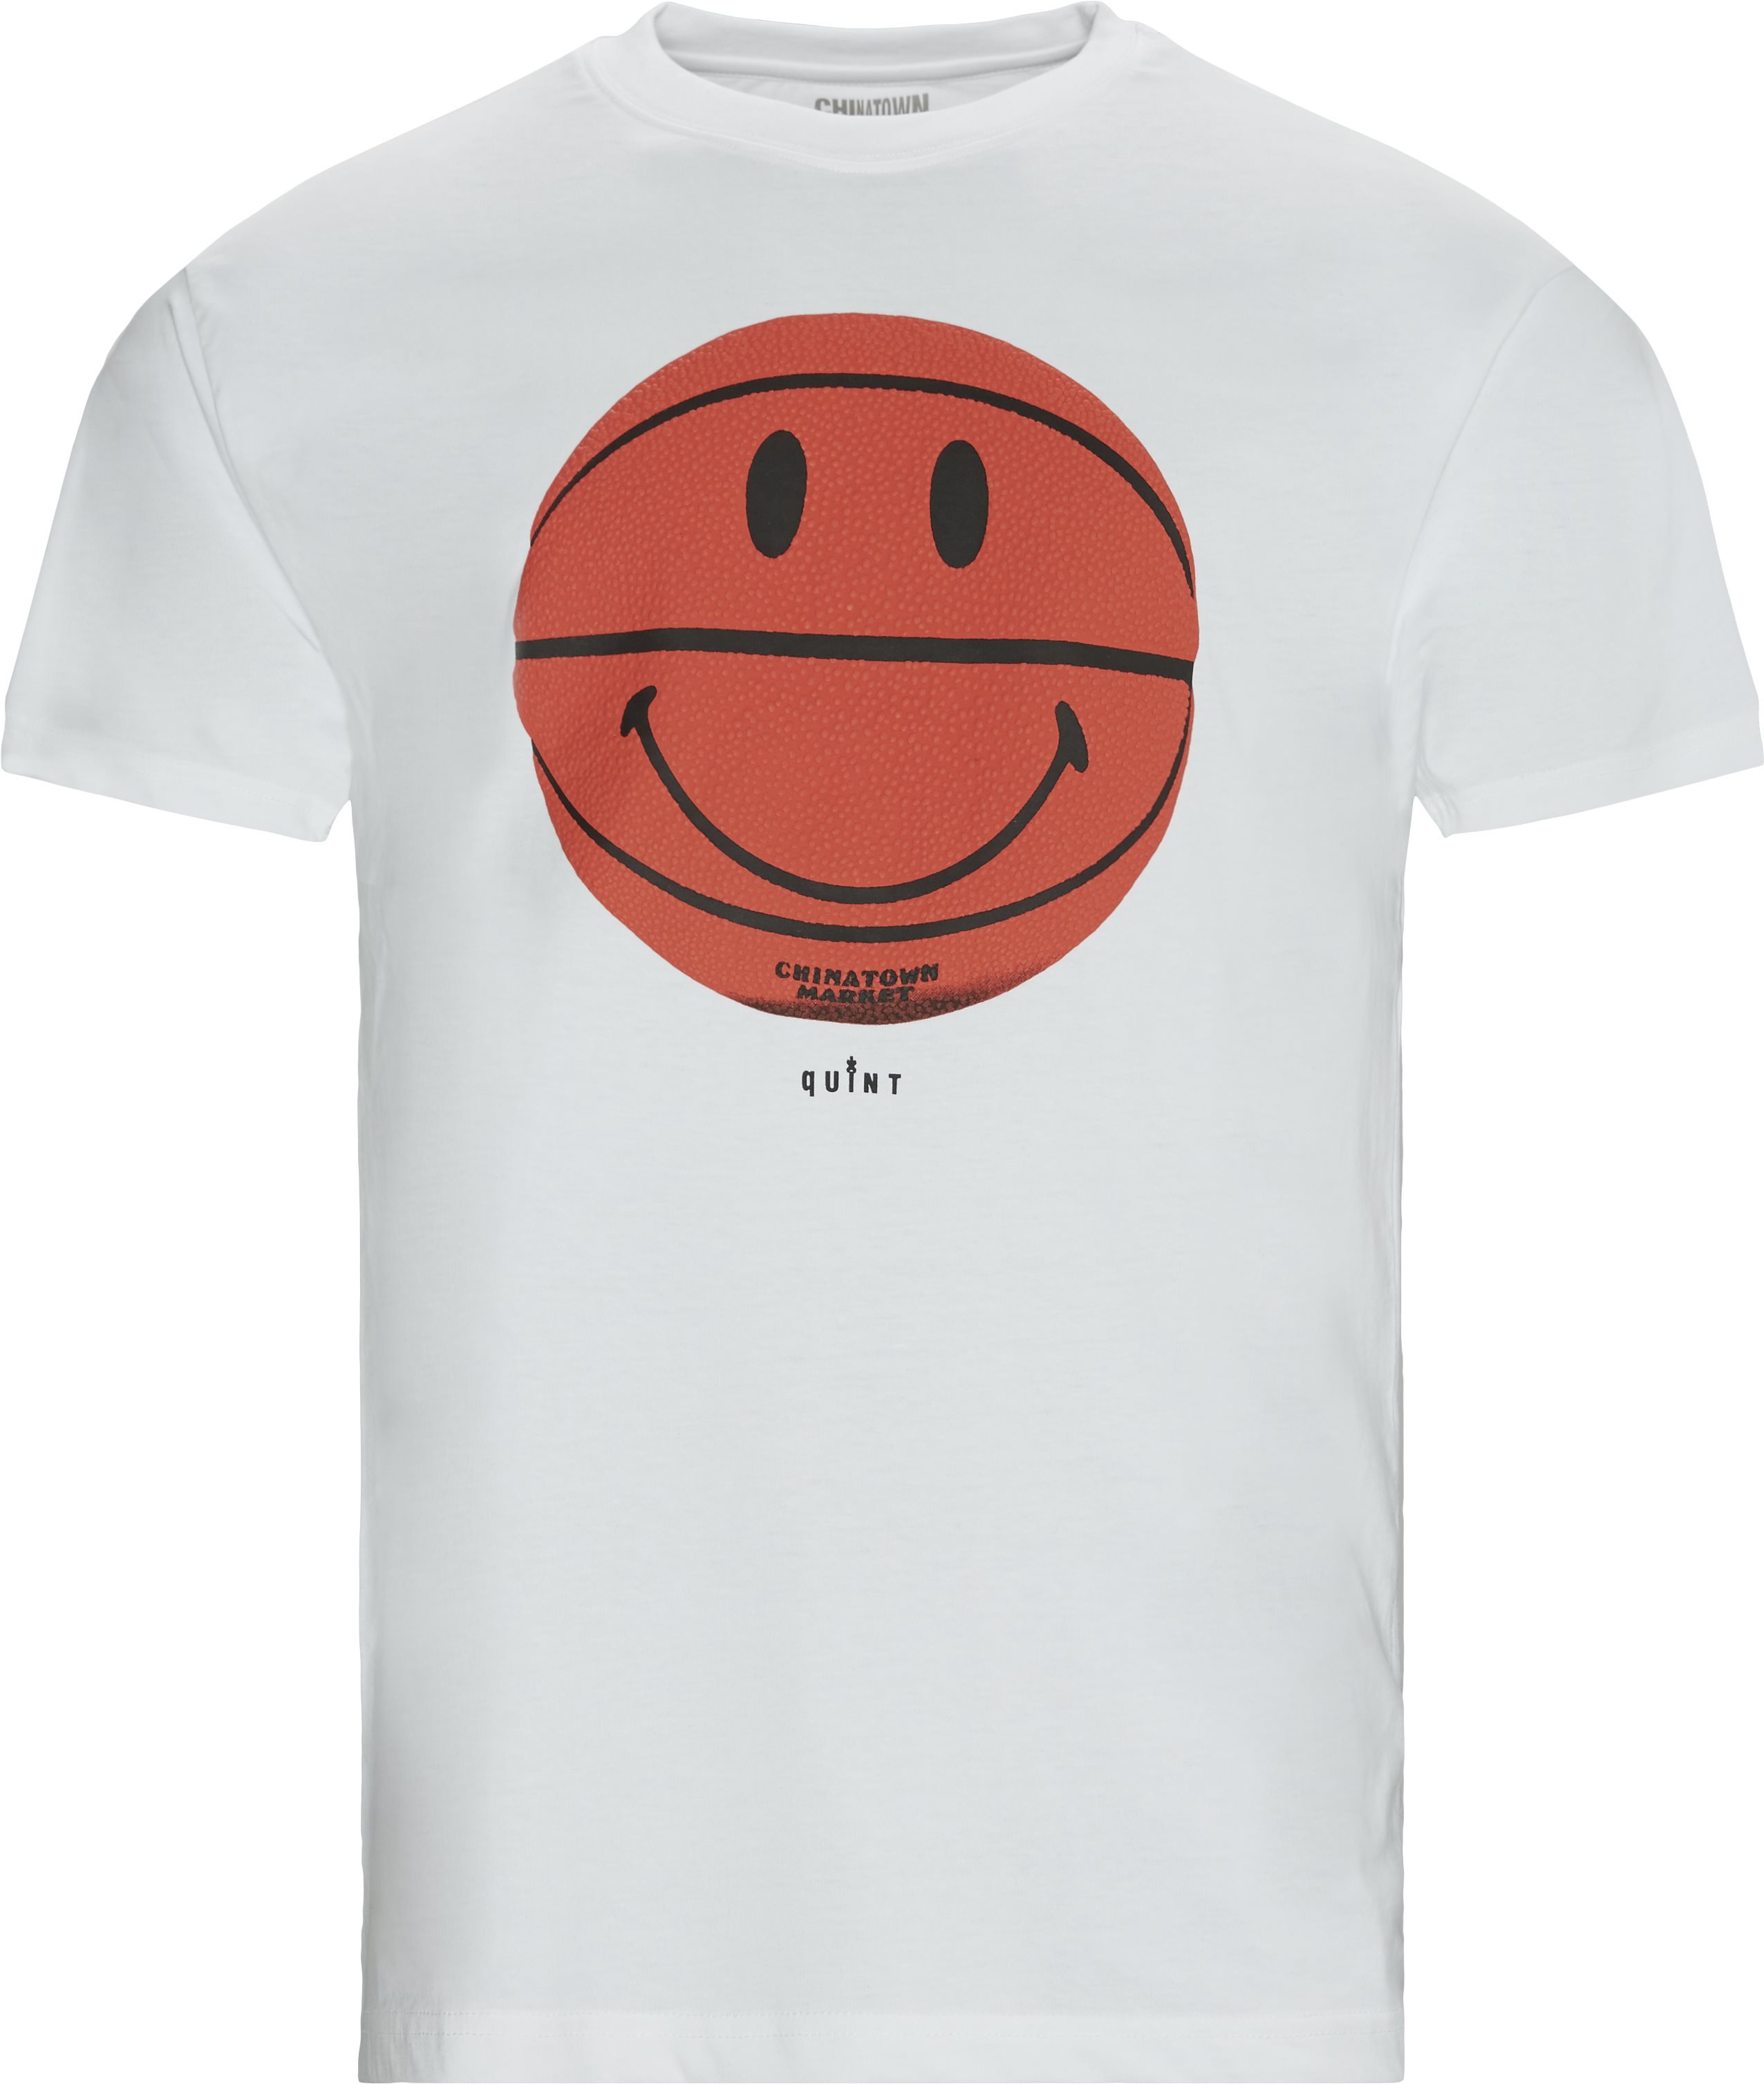 Smiley CTM X QUINT BBall Tee - T-shirts - Regular fit - Vit